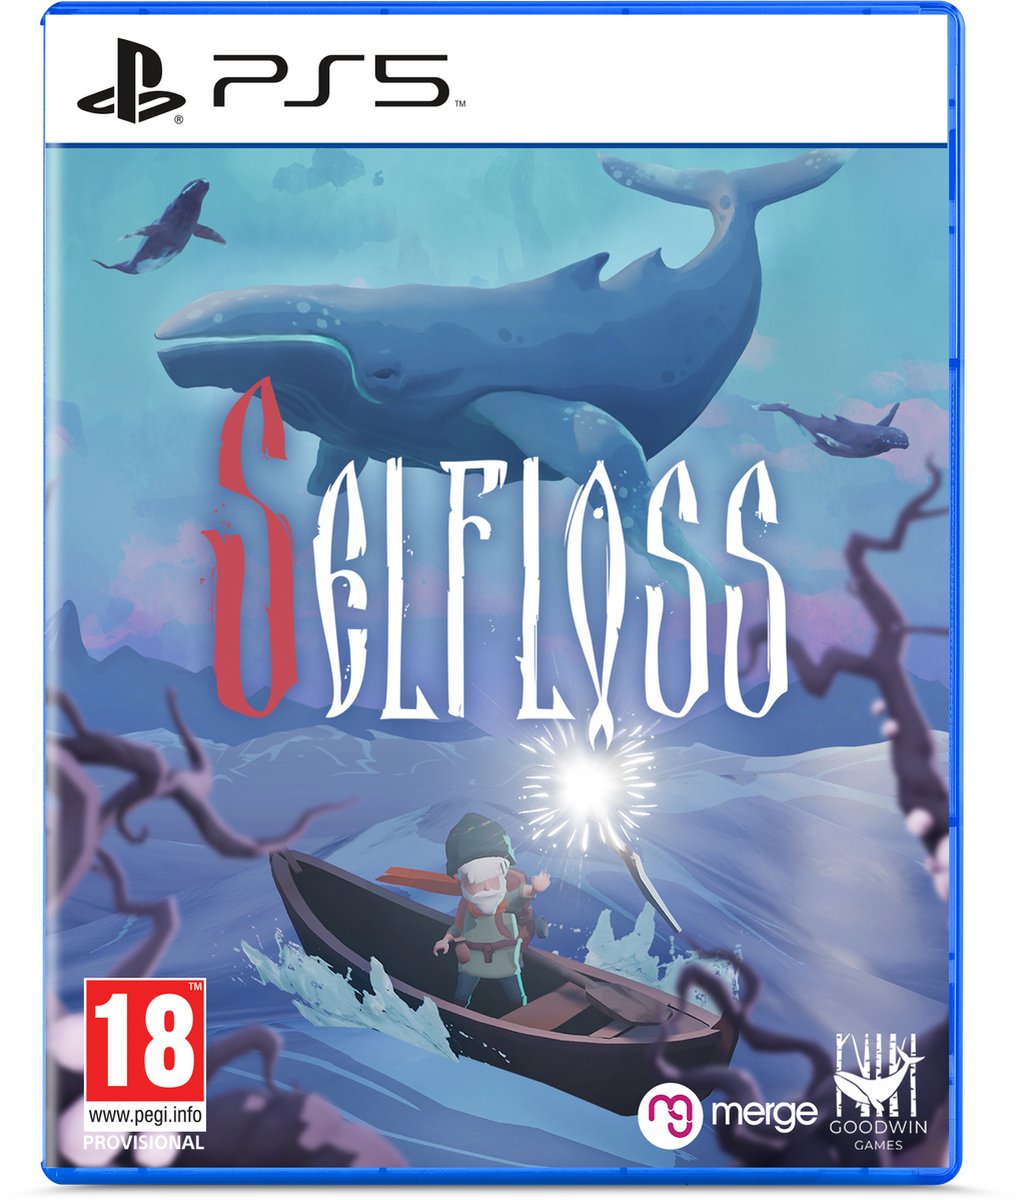 Selfloss (PS5), Goodwin Games, Merge Games